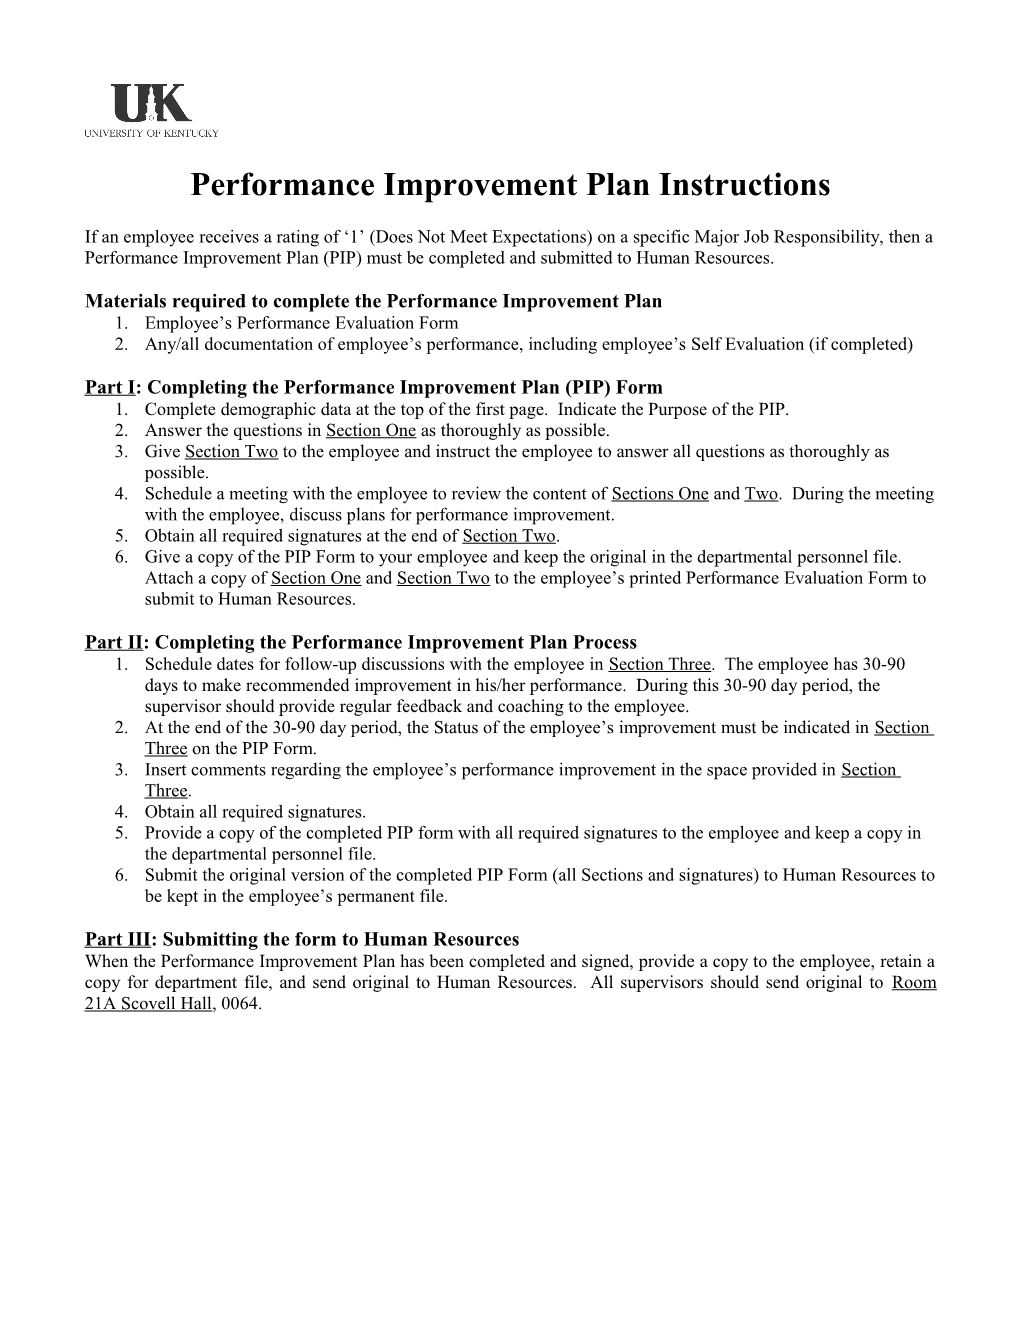 Performance Improvement Plan s1